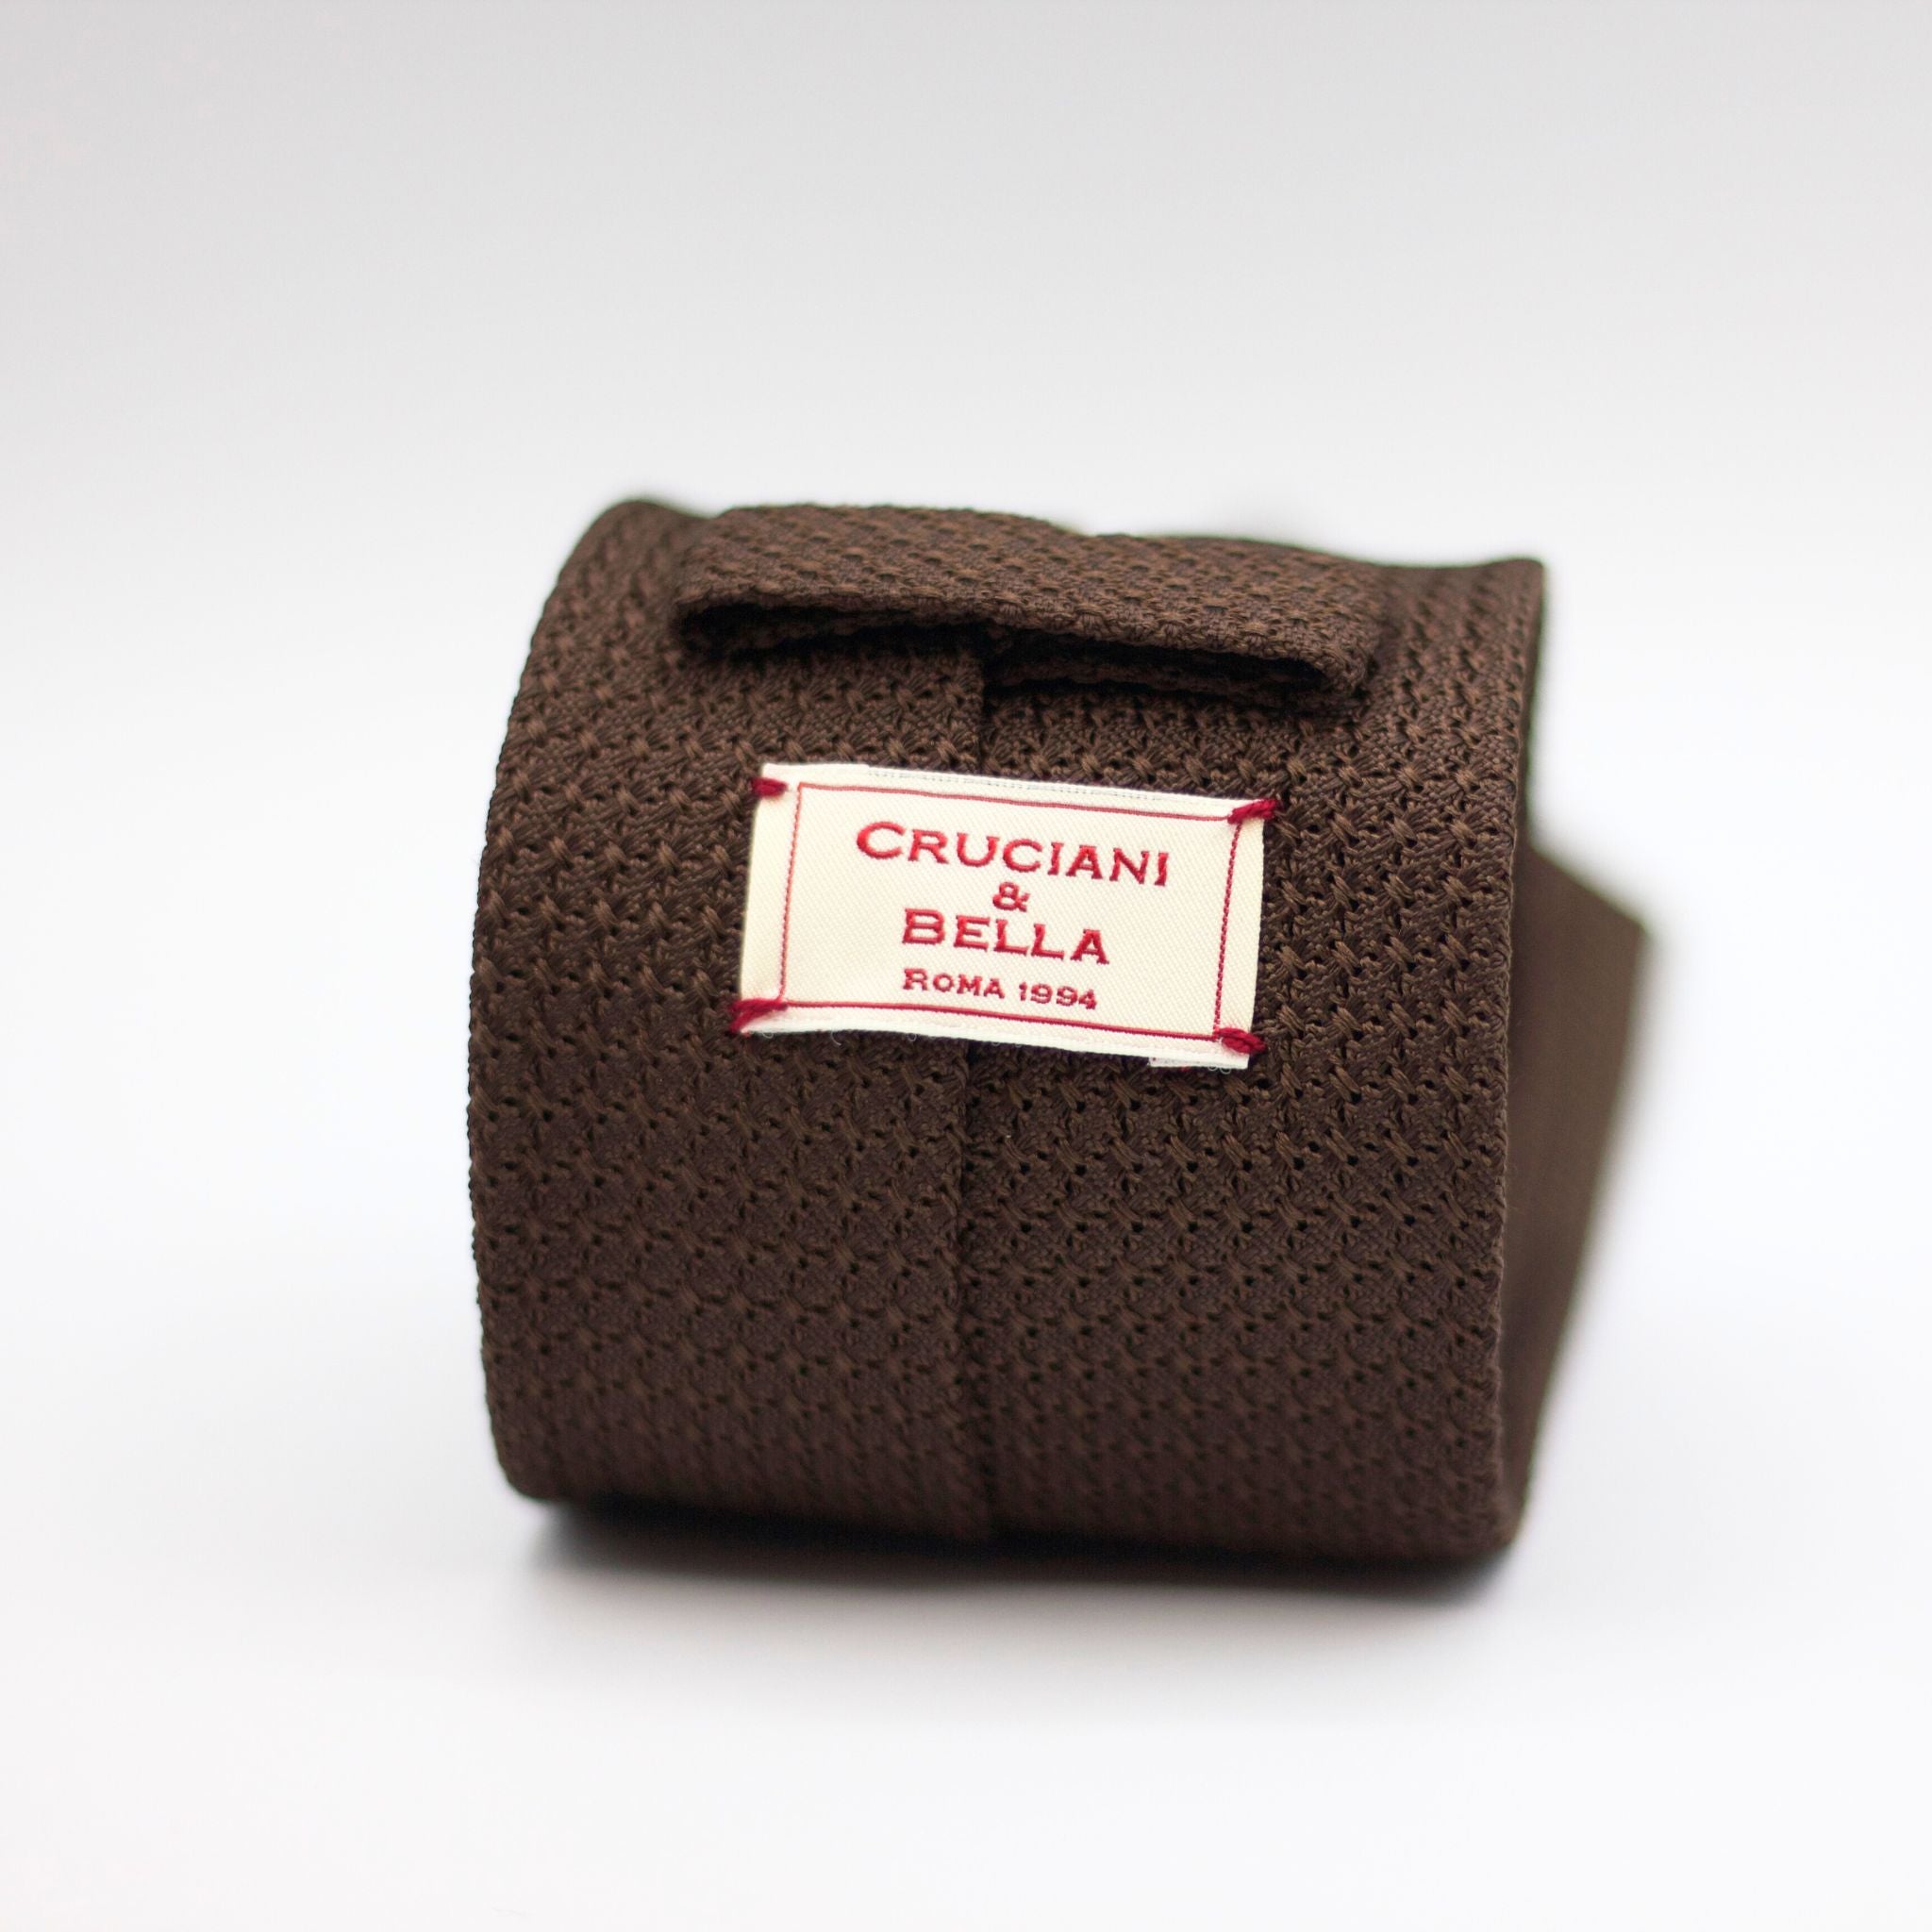 Cruciani & Bella 100% Silk Grenadine Garza Grossa Woven in Italy Tipped Brown plain tie Handmade in Italy 8 cm x 150 cm